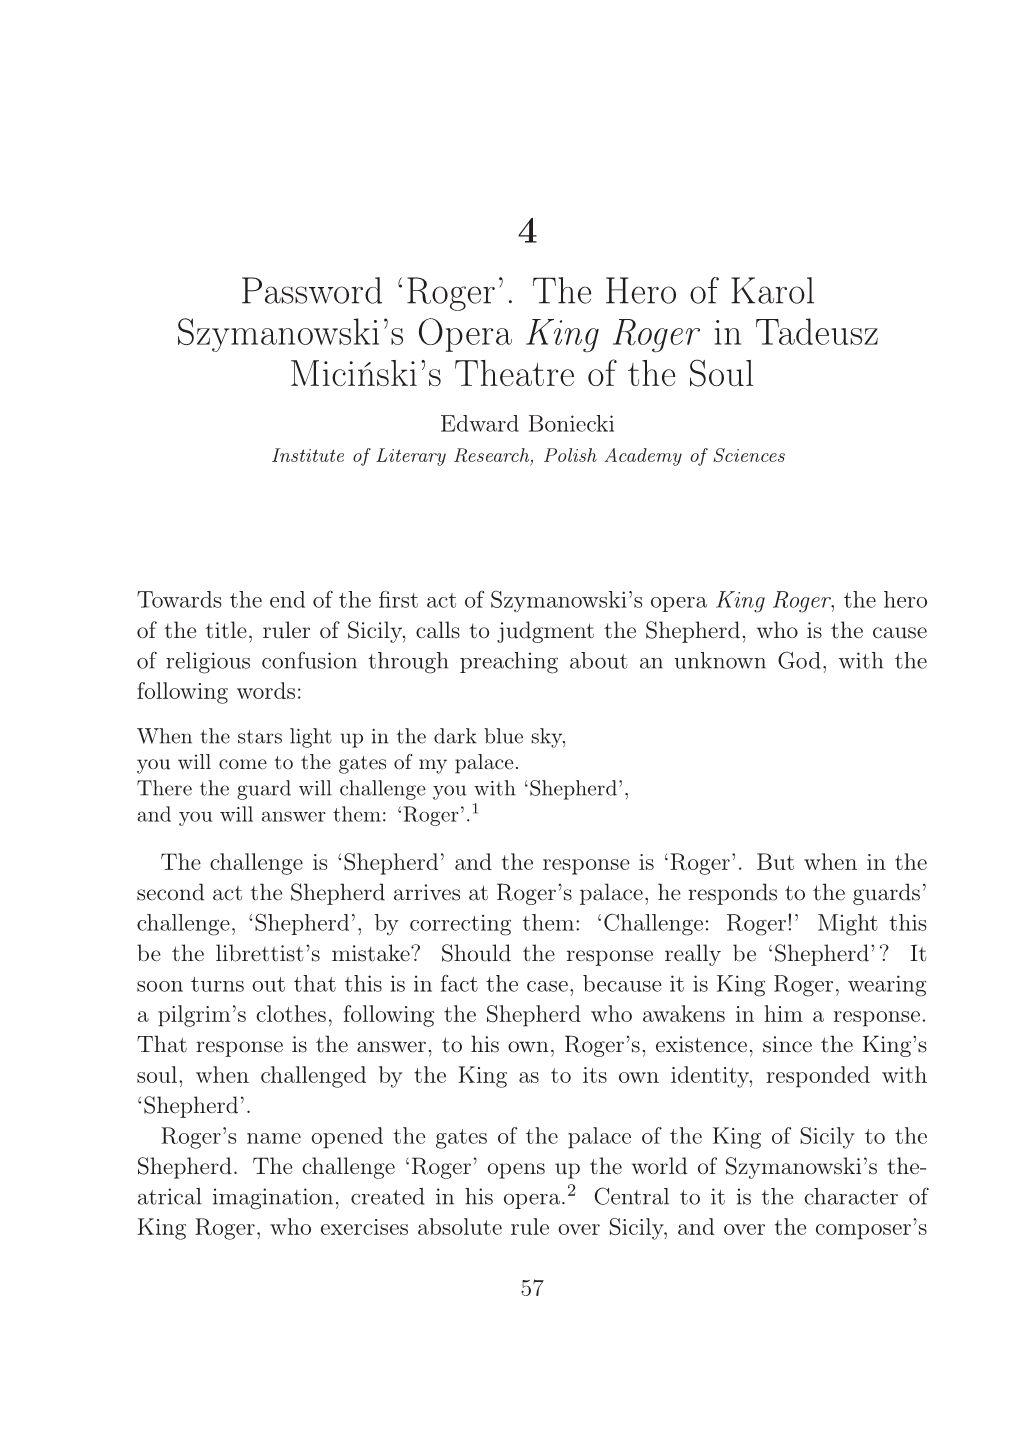 The Hero of Karol Szymanowski's Opera King Roger In